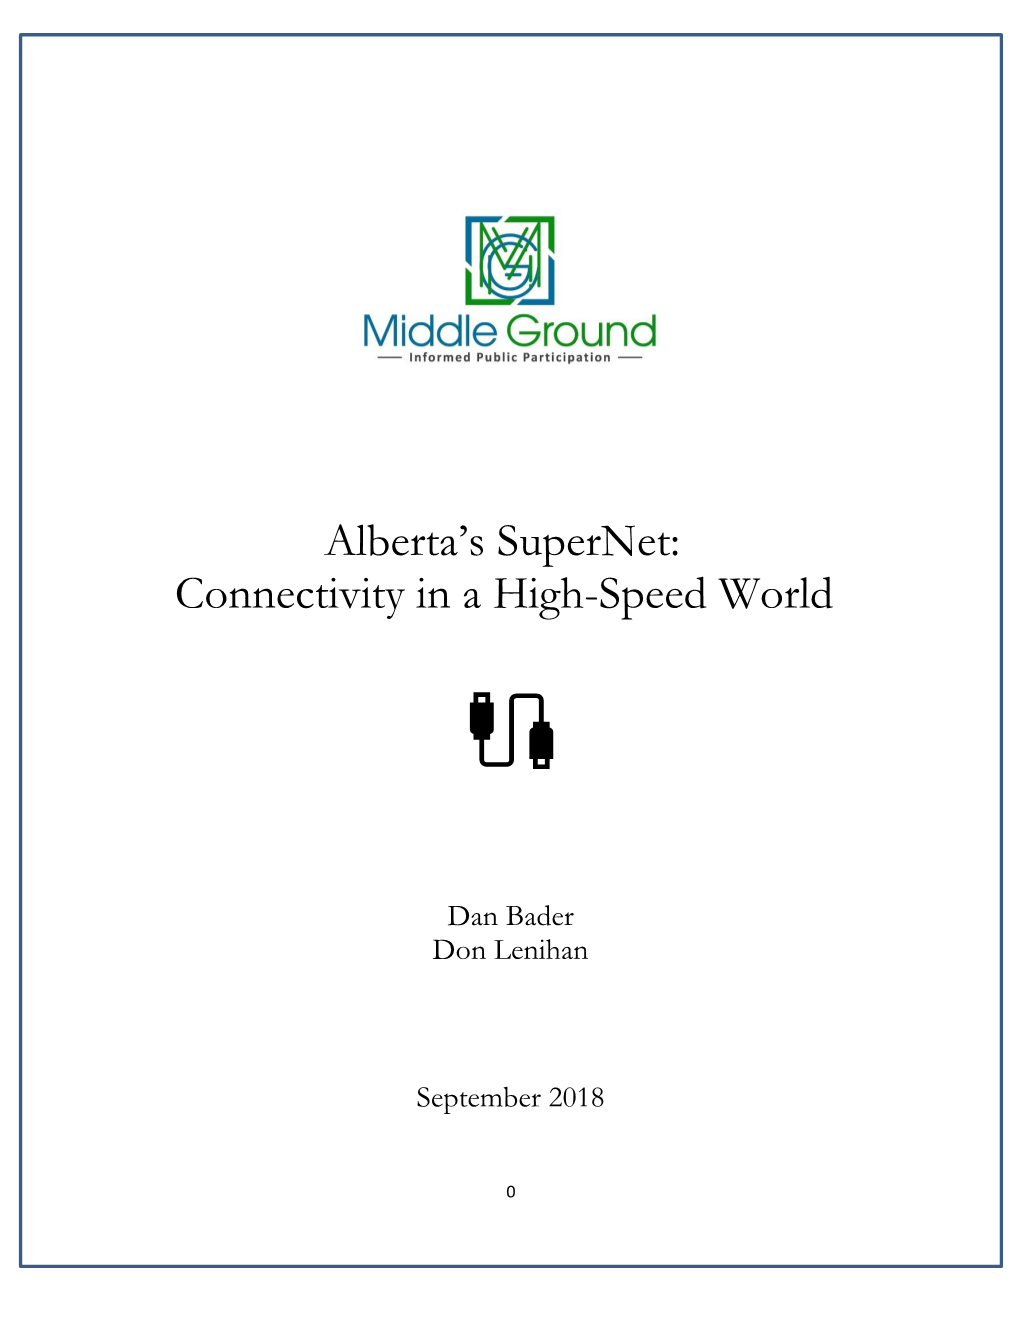 Alberta's Supernet